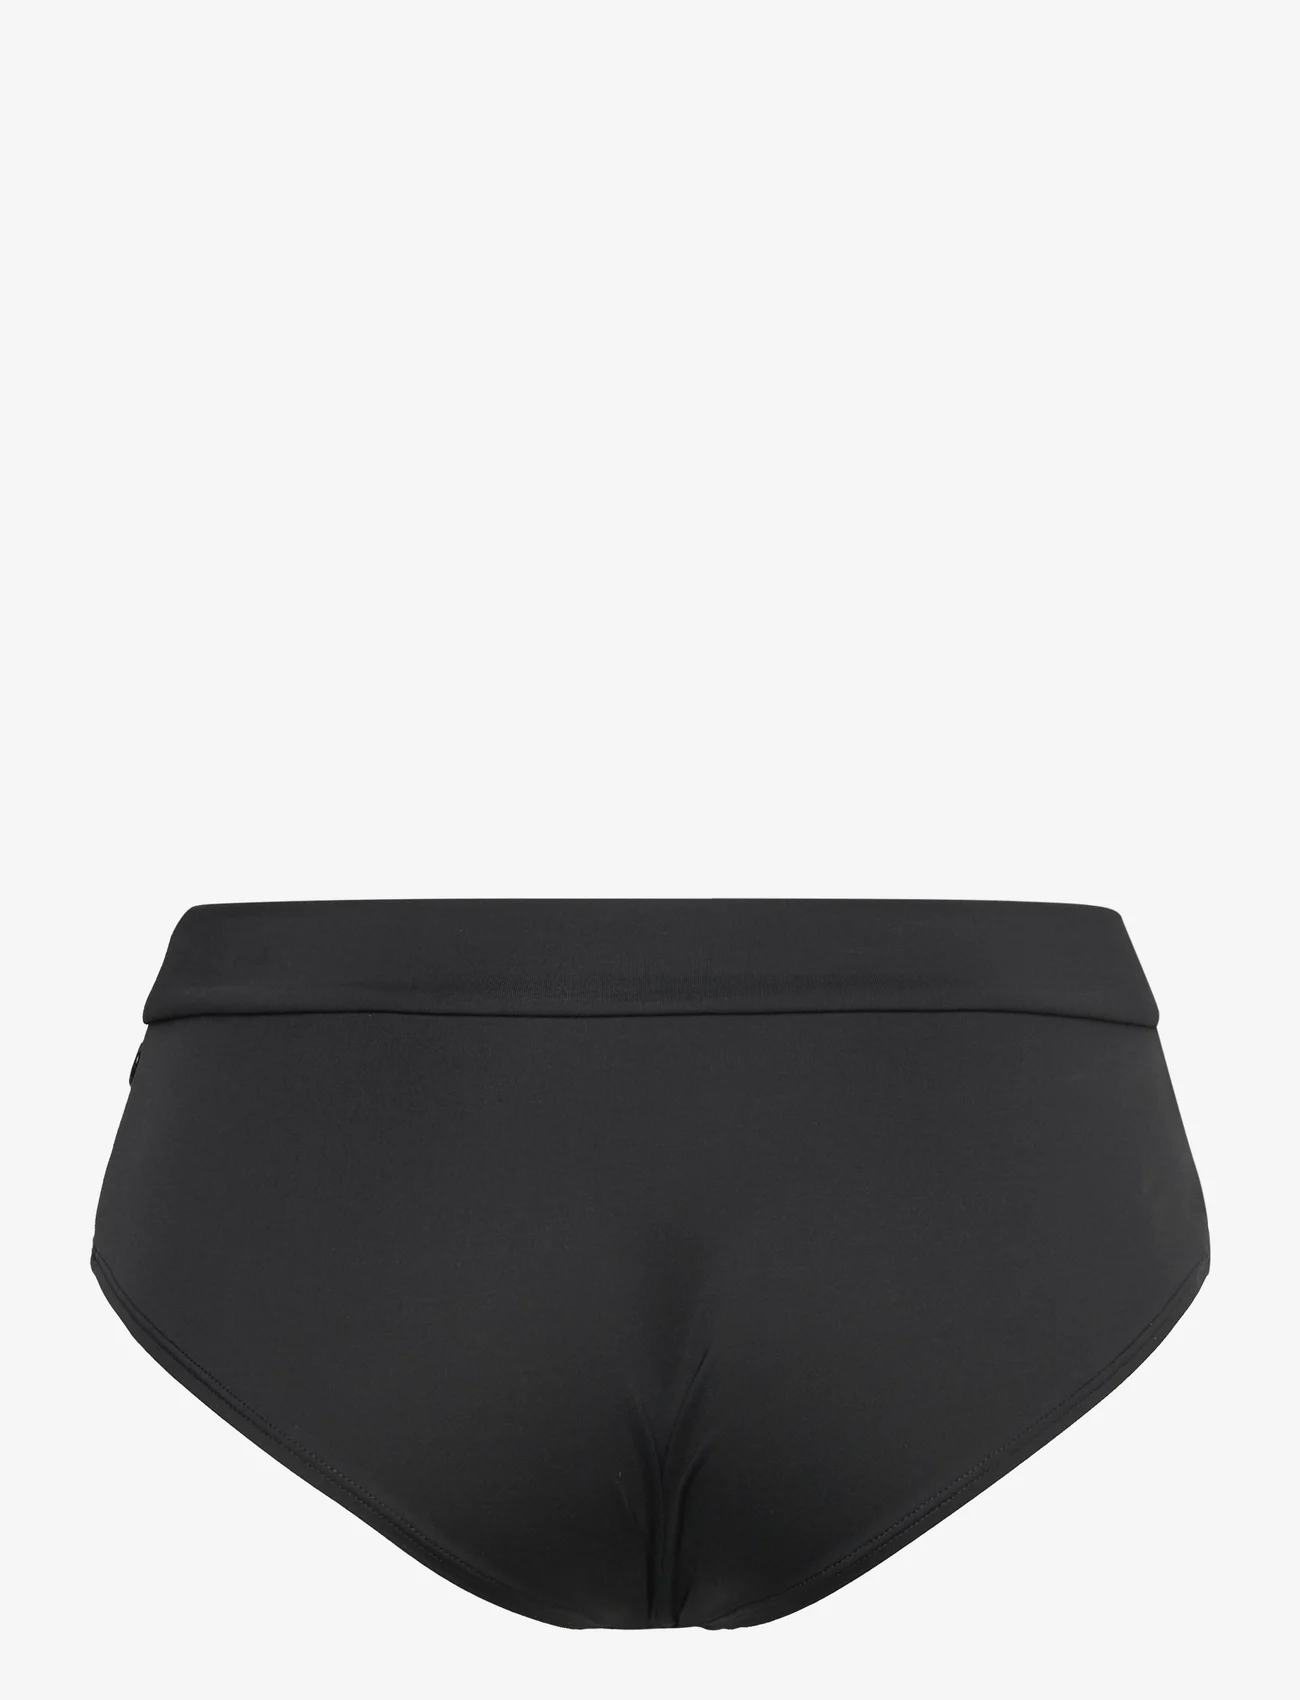 Panos Emporio - Melina Solid Bottom - bikini truser - black - 1